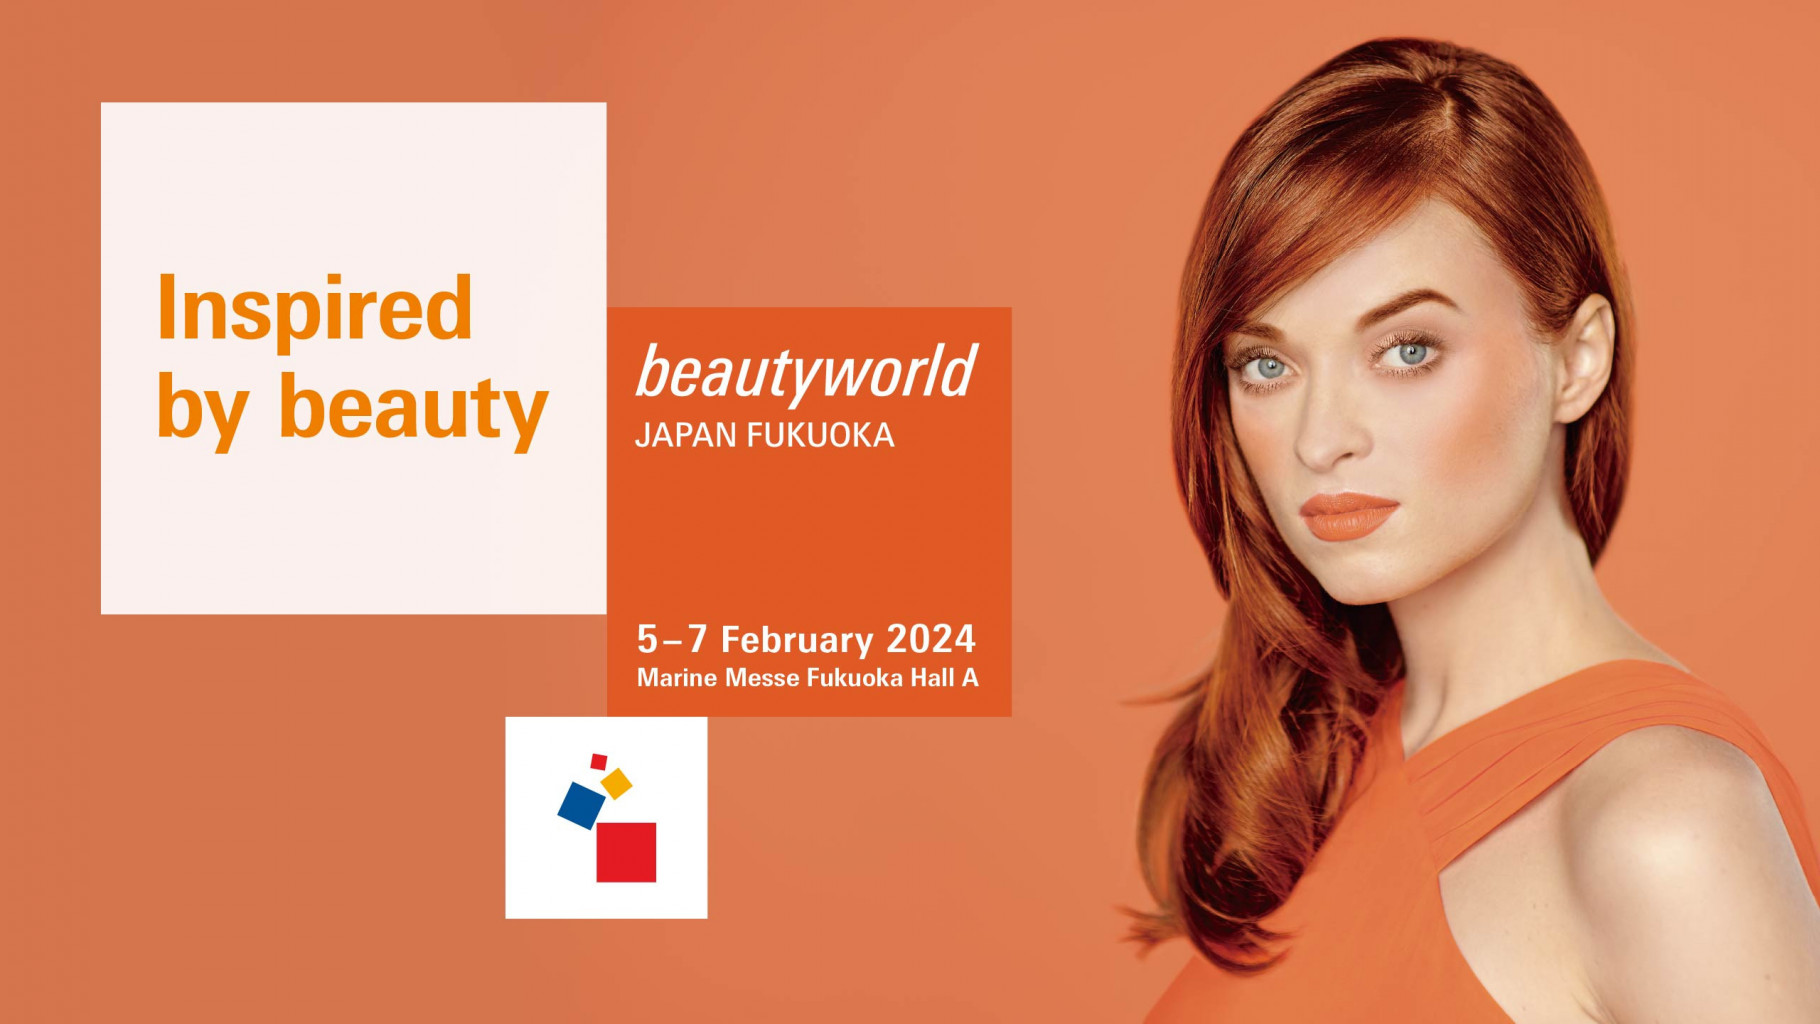 Beautyworld Japan Fukuoka Logo